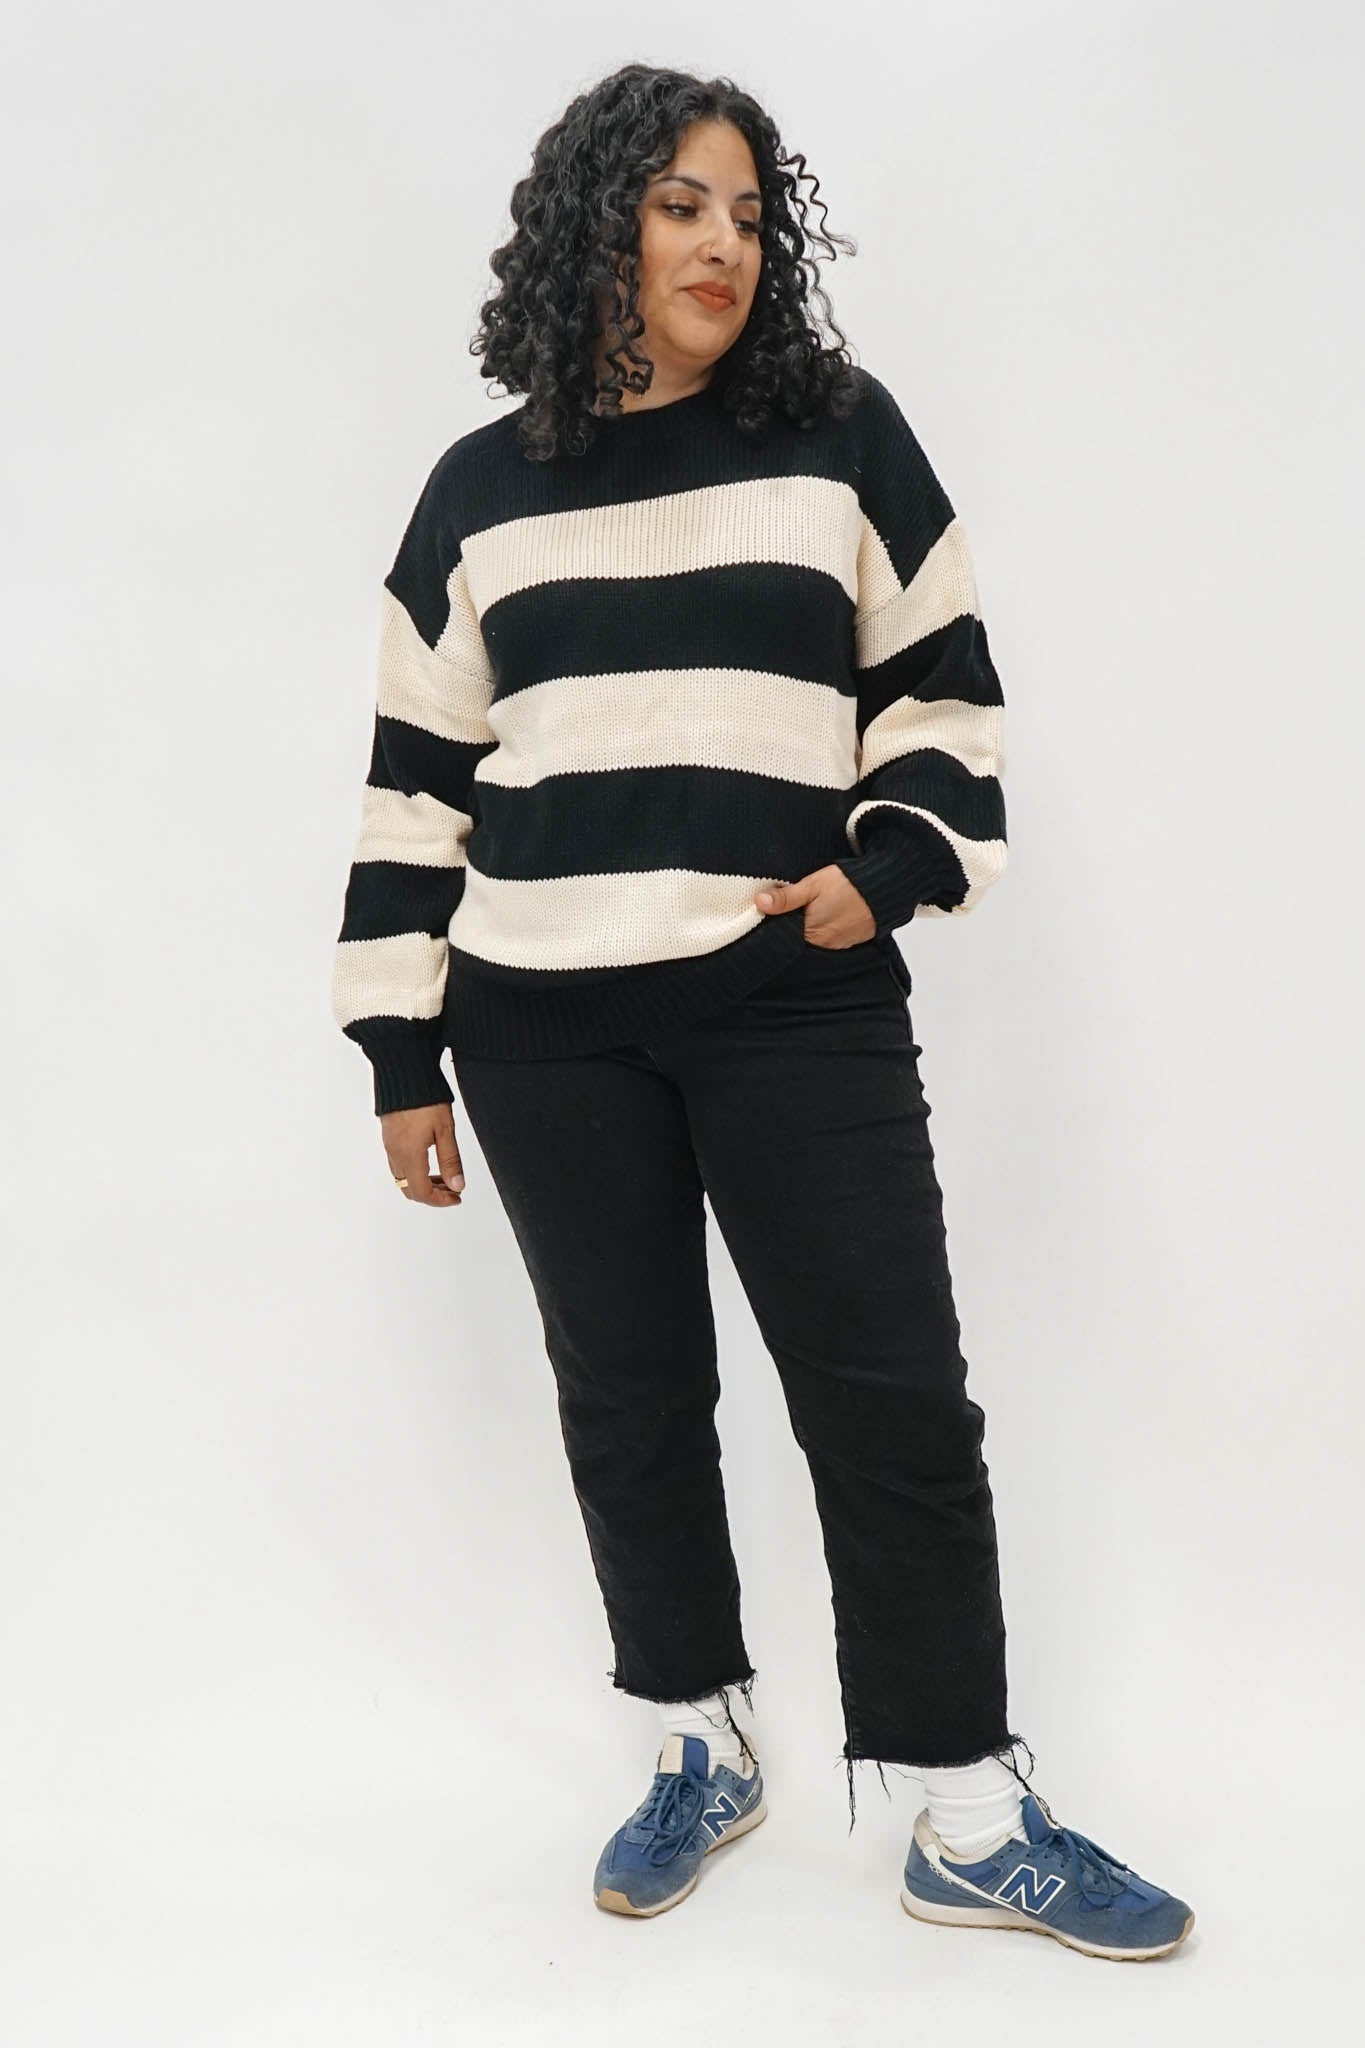 Williams Striped Sweater in Black